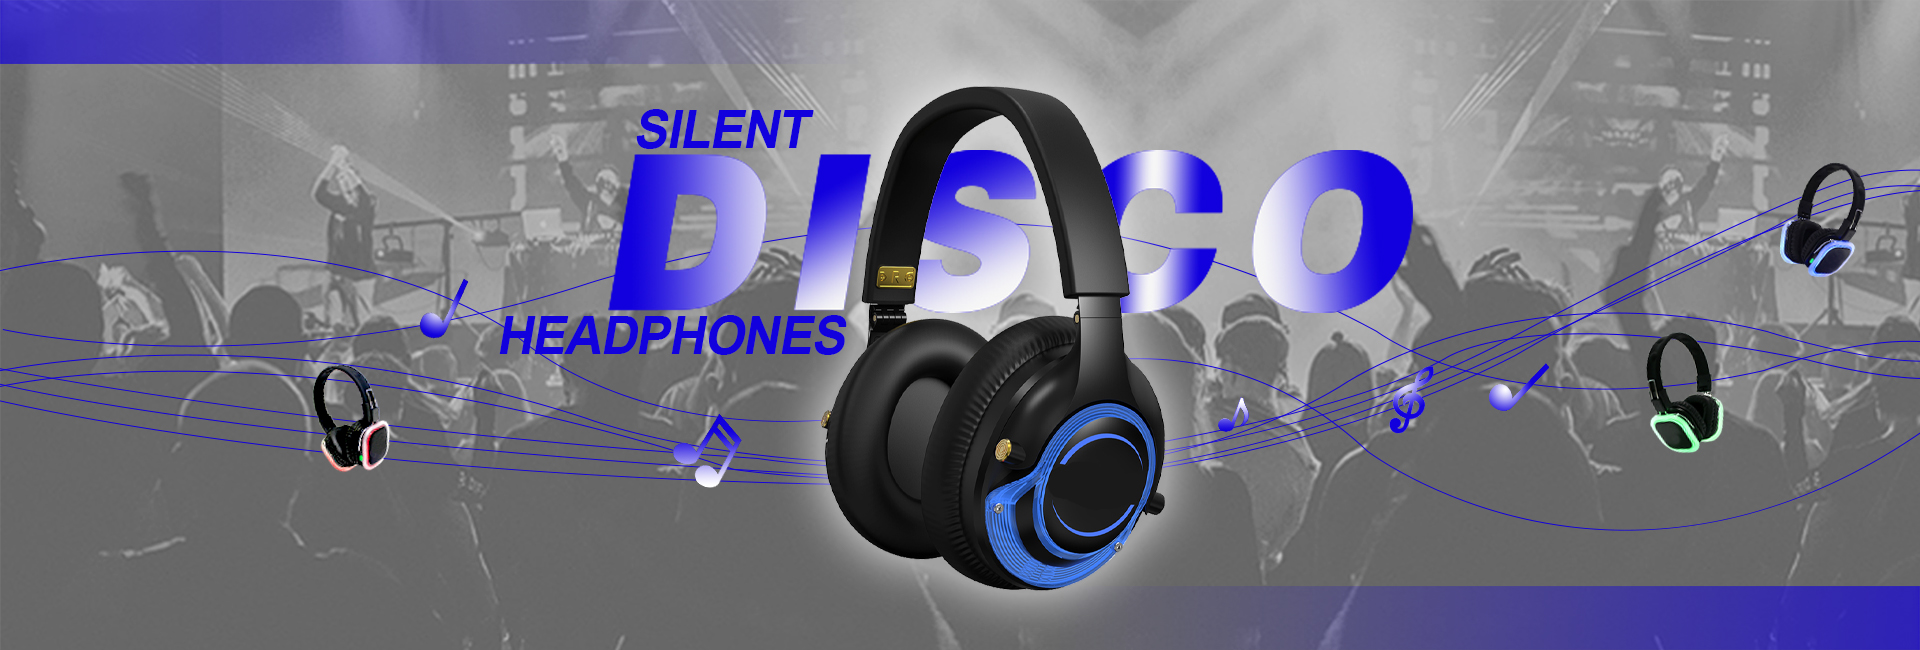 silent disco headphones